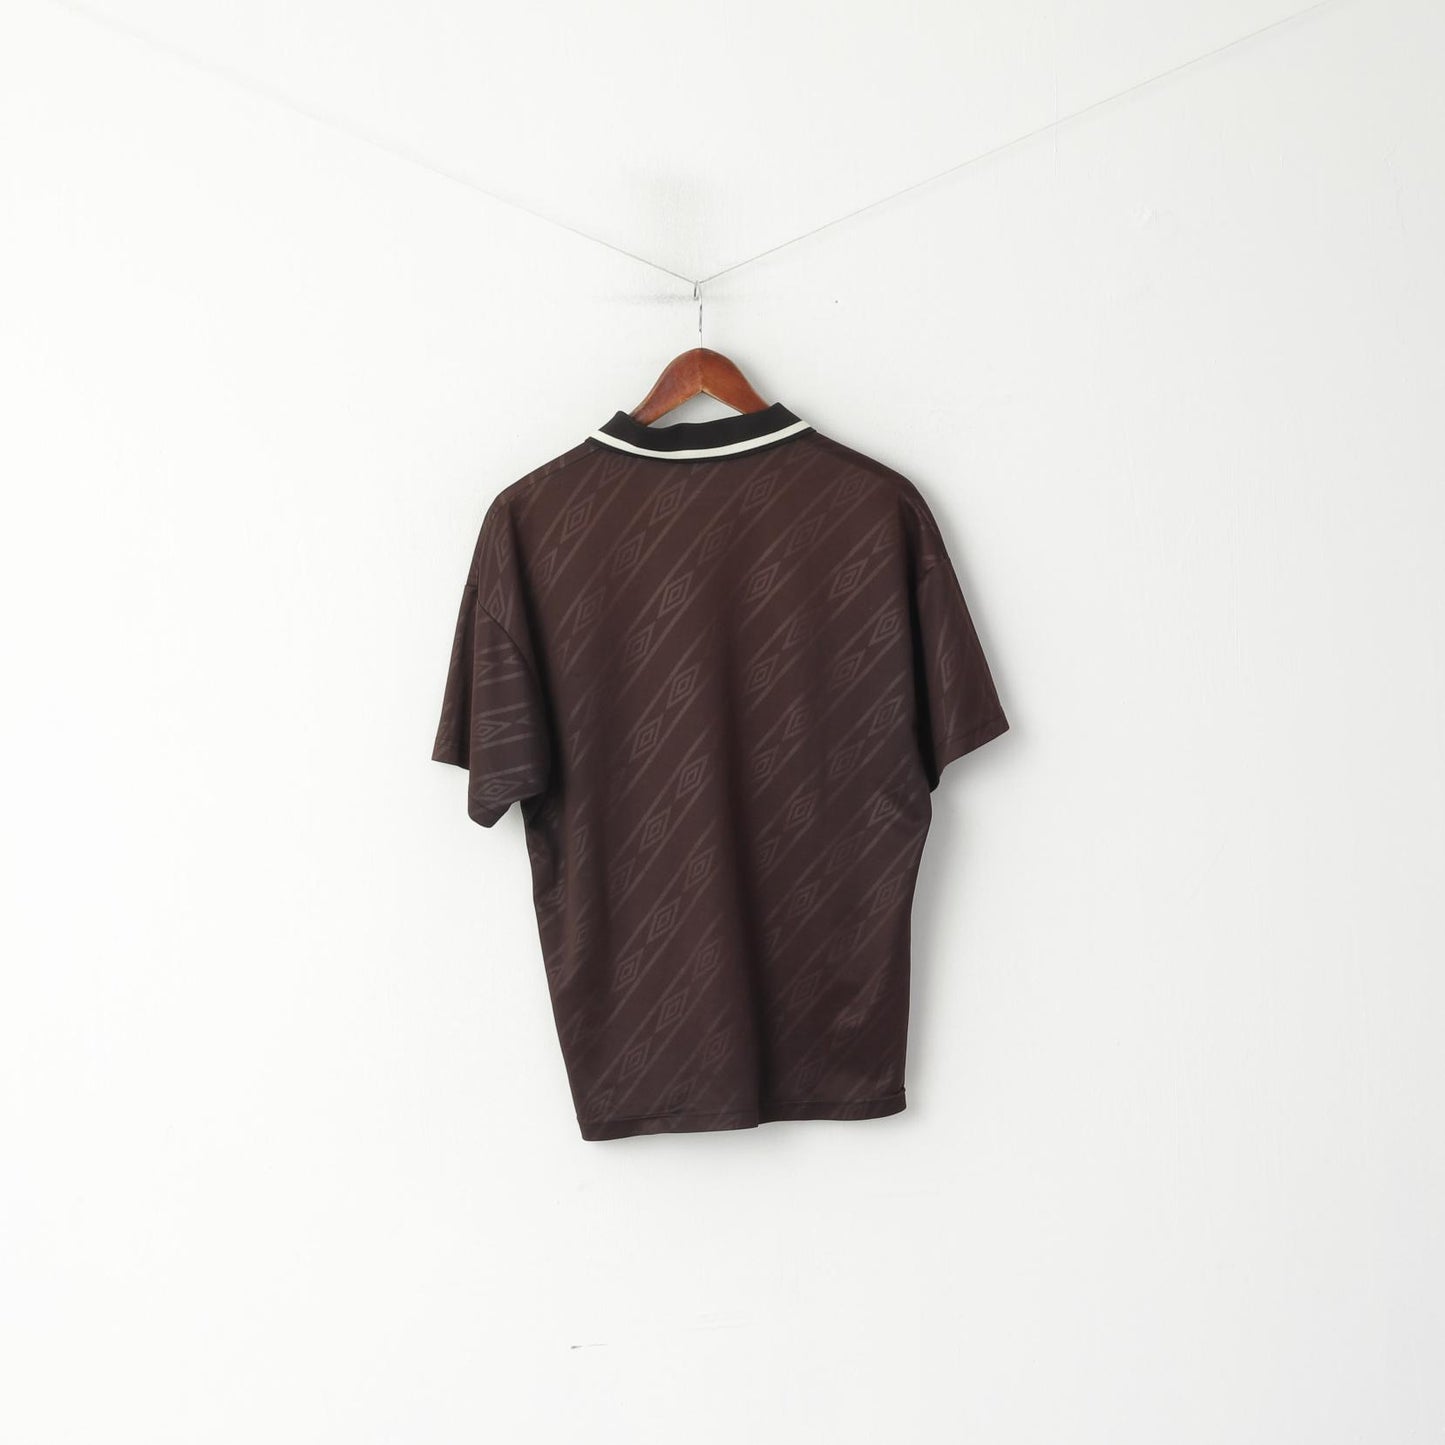 Umbro Men M Polo Shirt Brown Striped Shiny Vintage Sport Football Training Jersey Top